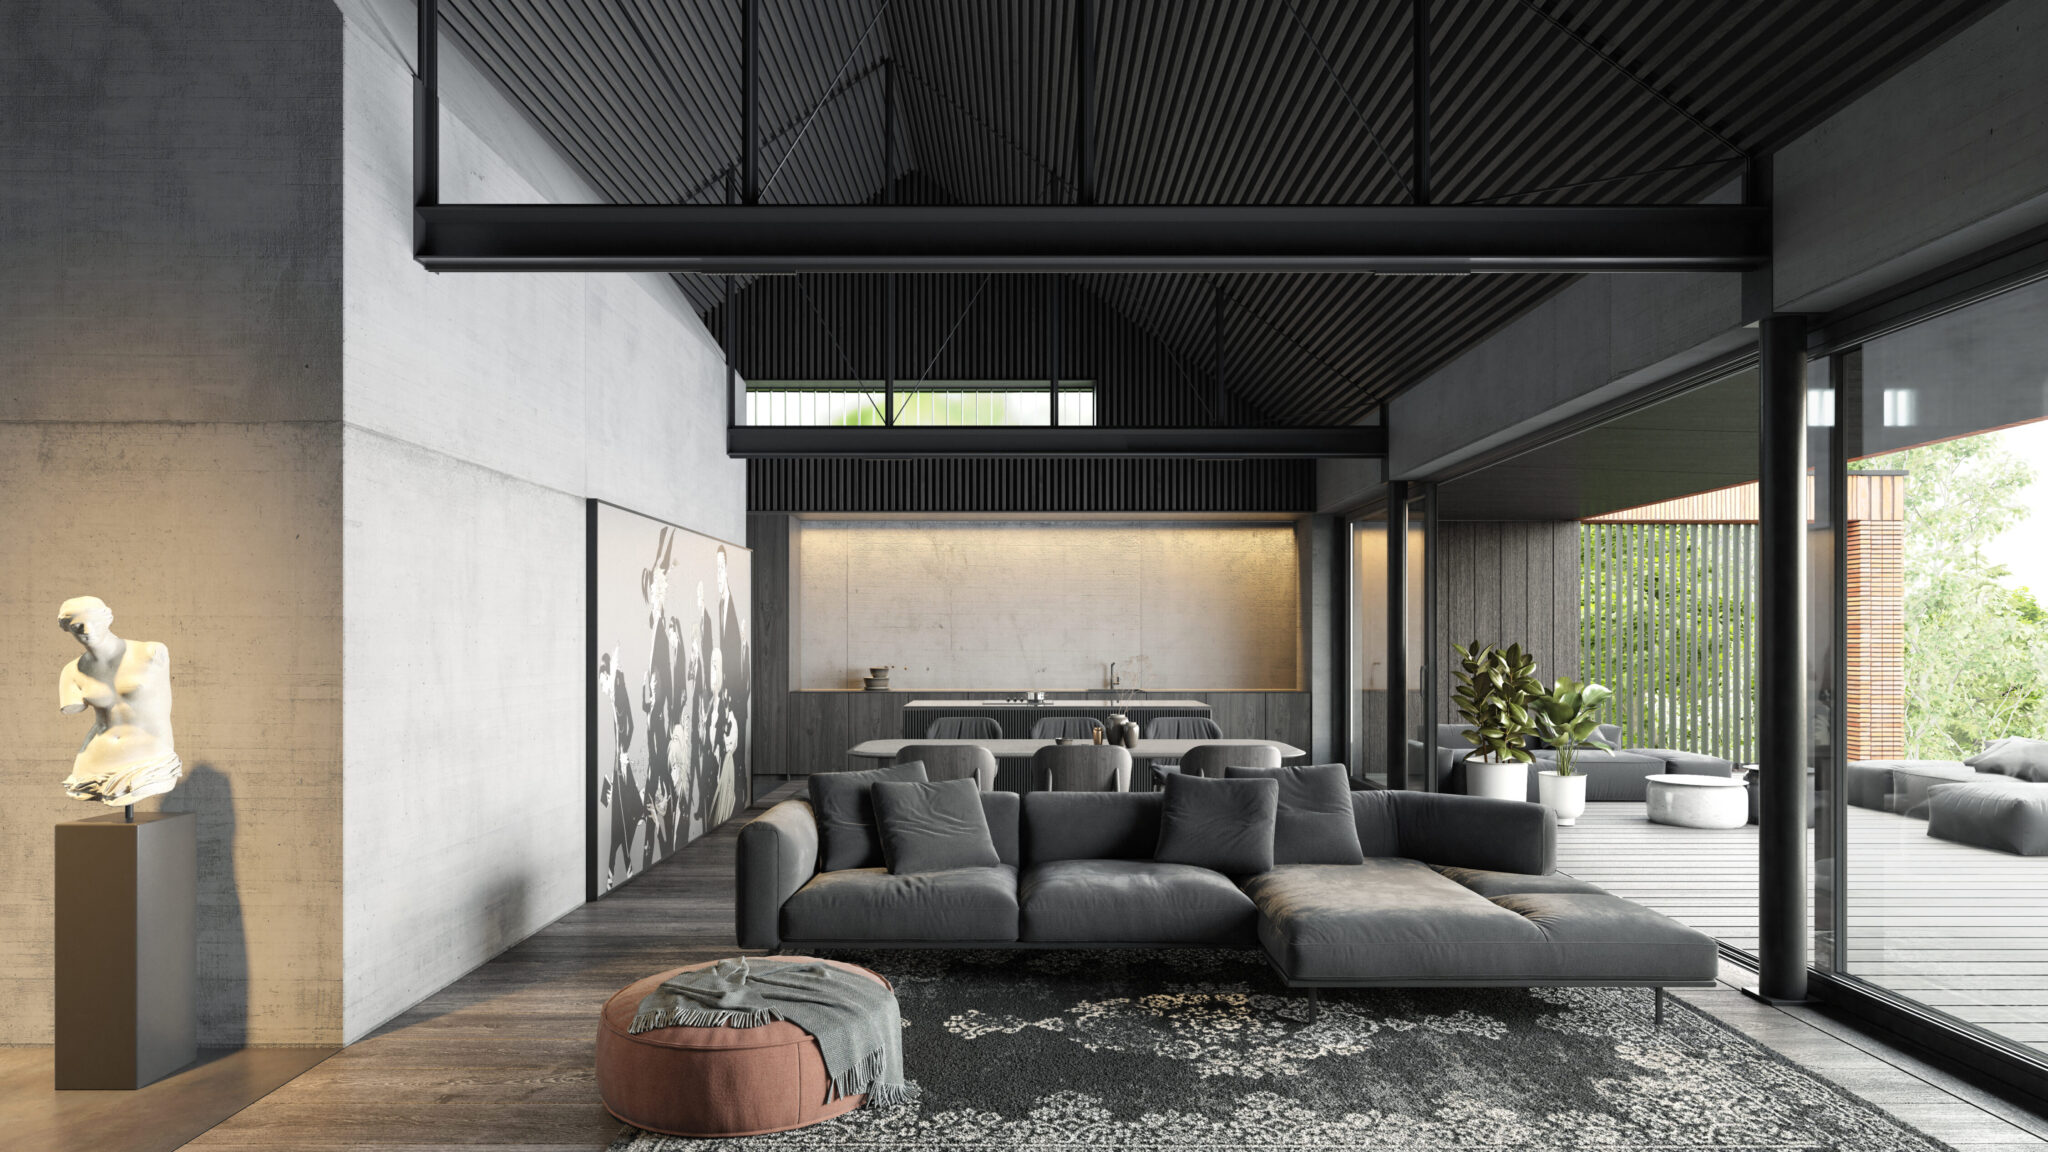 Interior Design of the Living Room